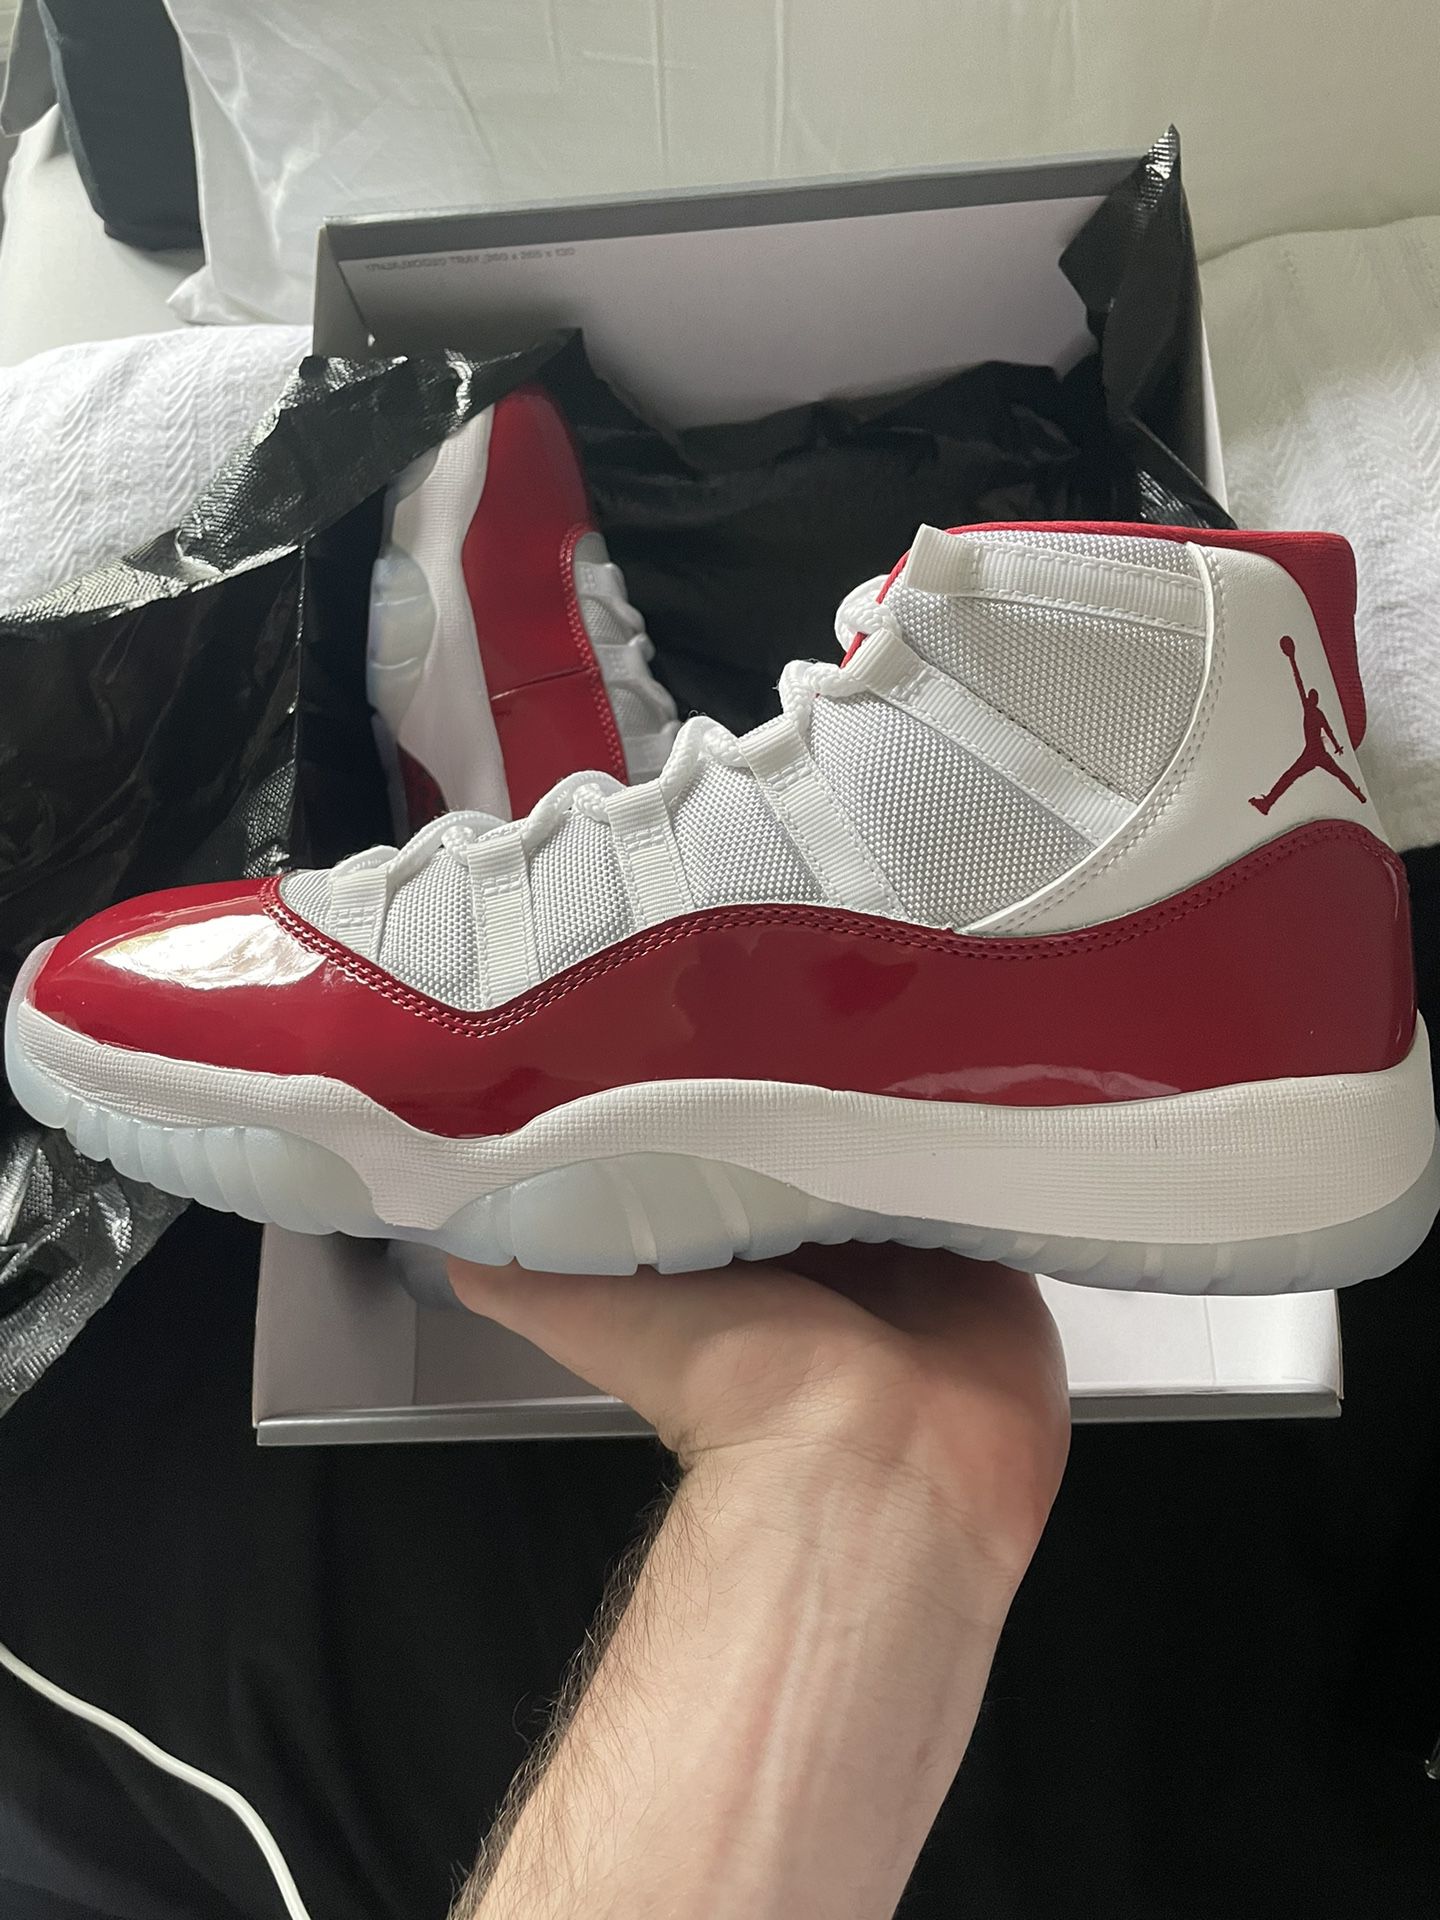 Jordan 11 Cherry Size 11.5